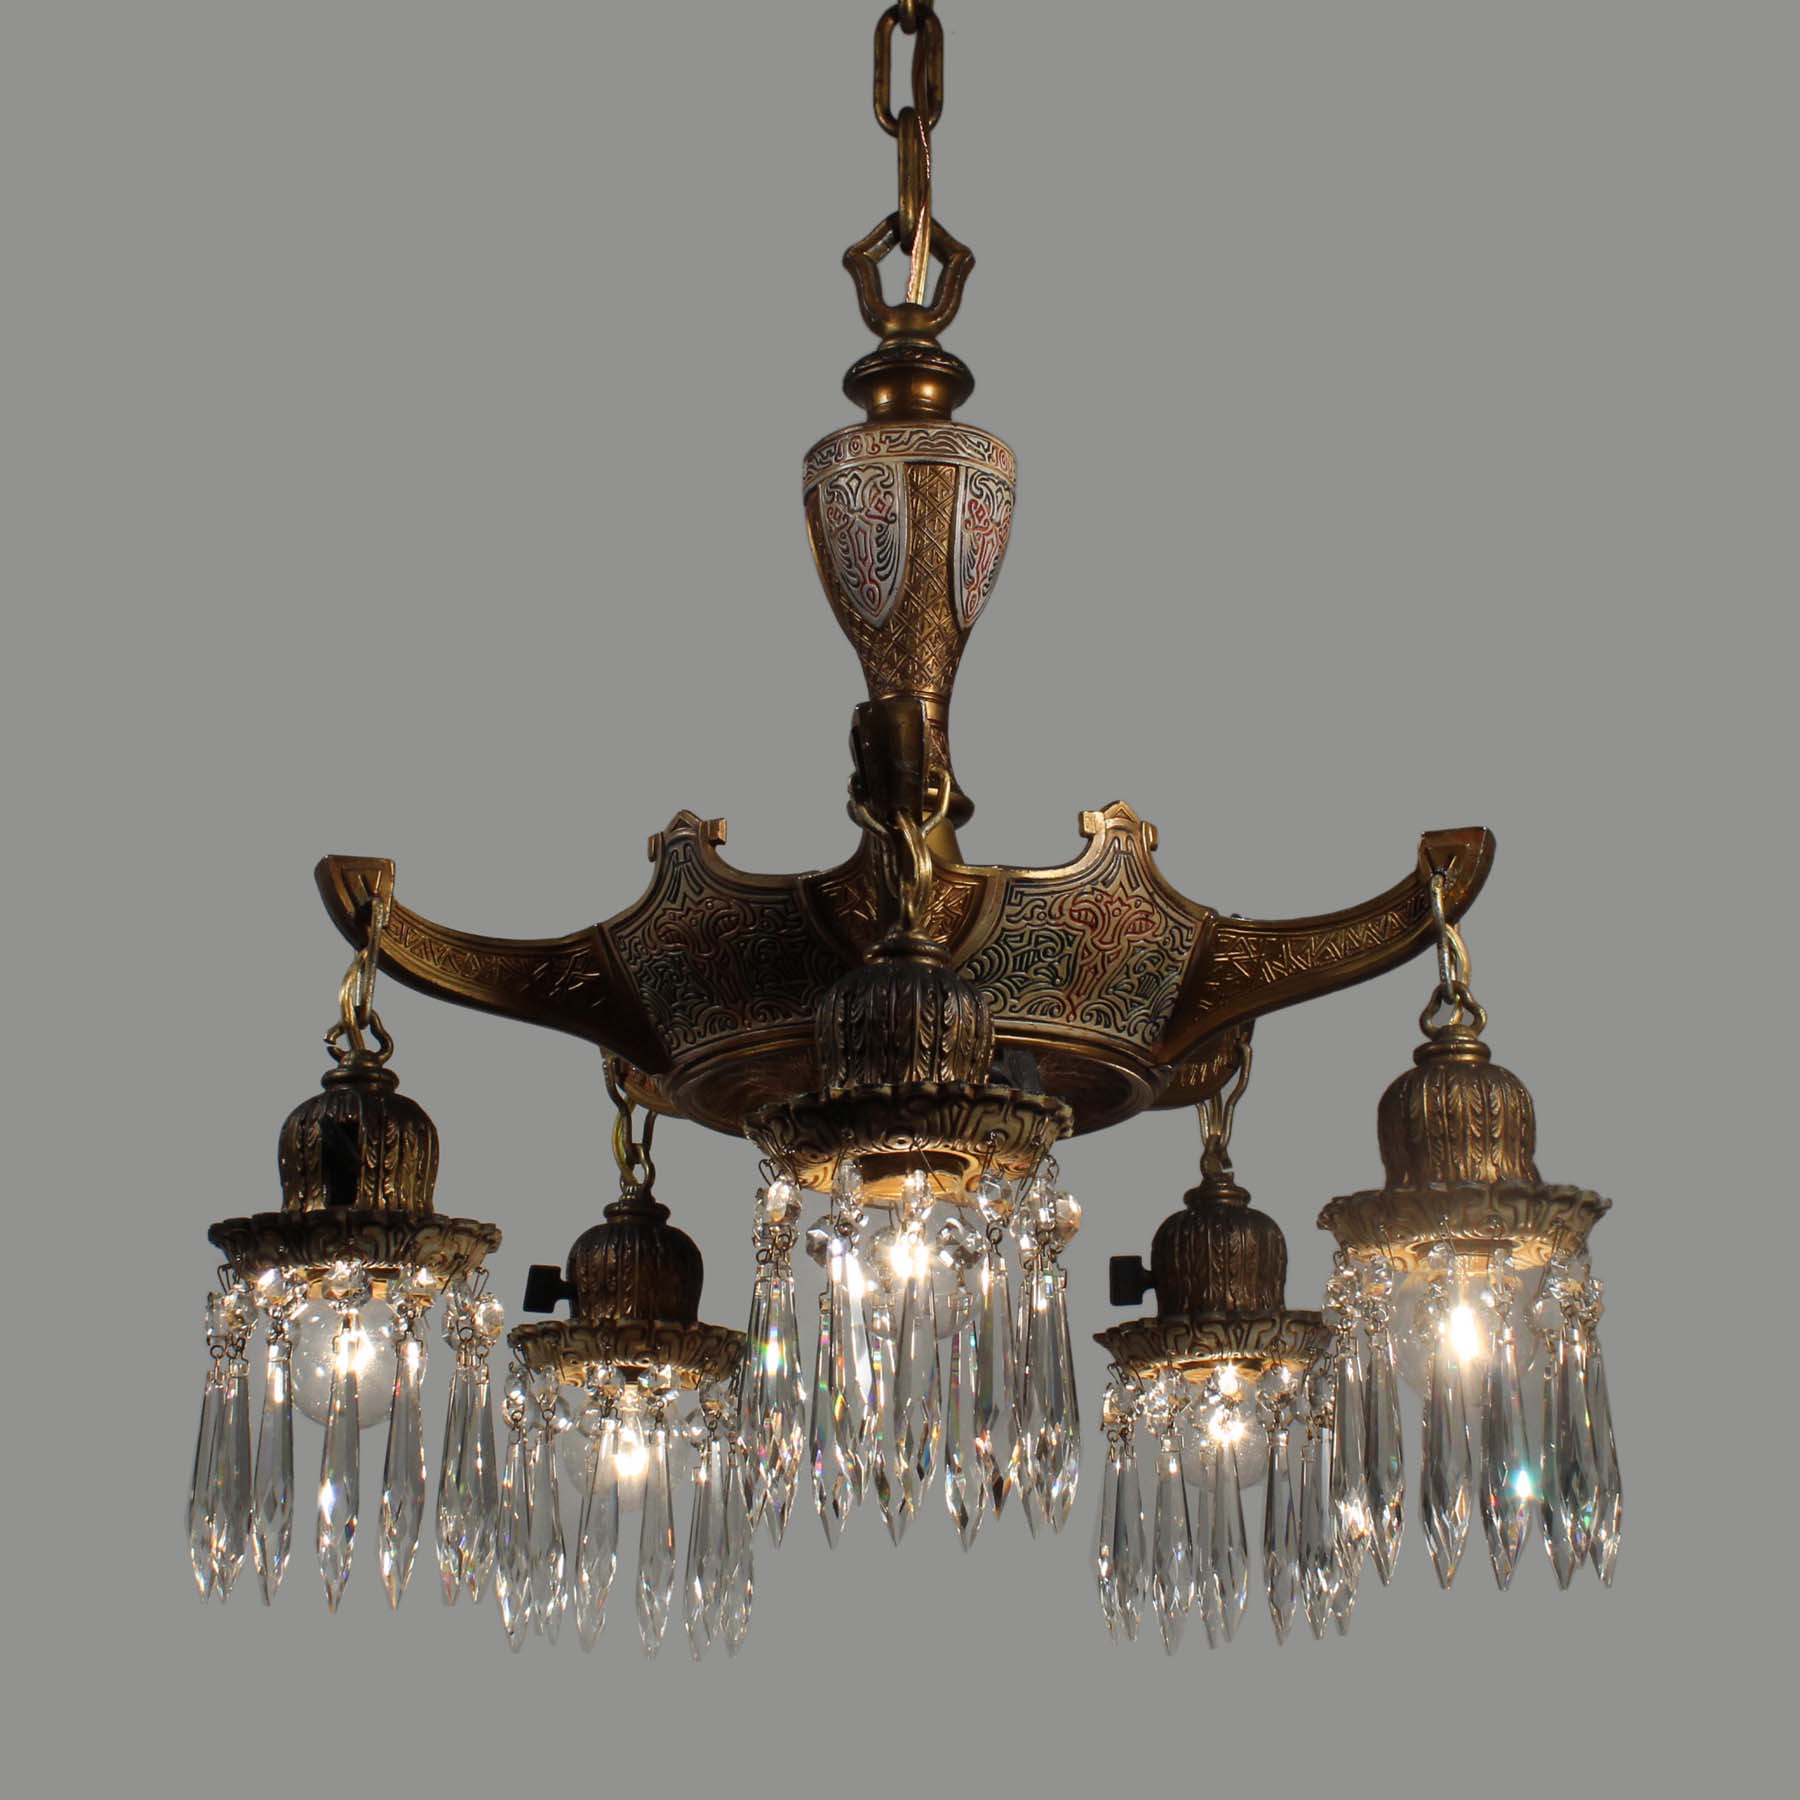 SOLD Antique Spanish Revival Chandelier, Empire Lighting-69982